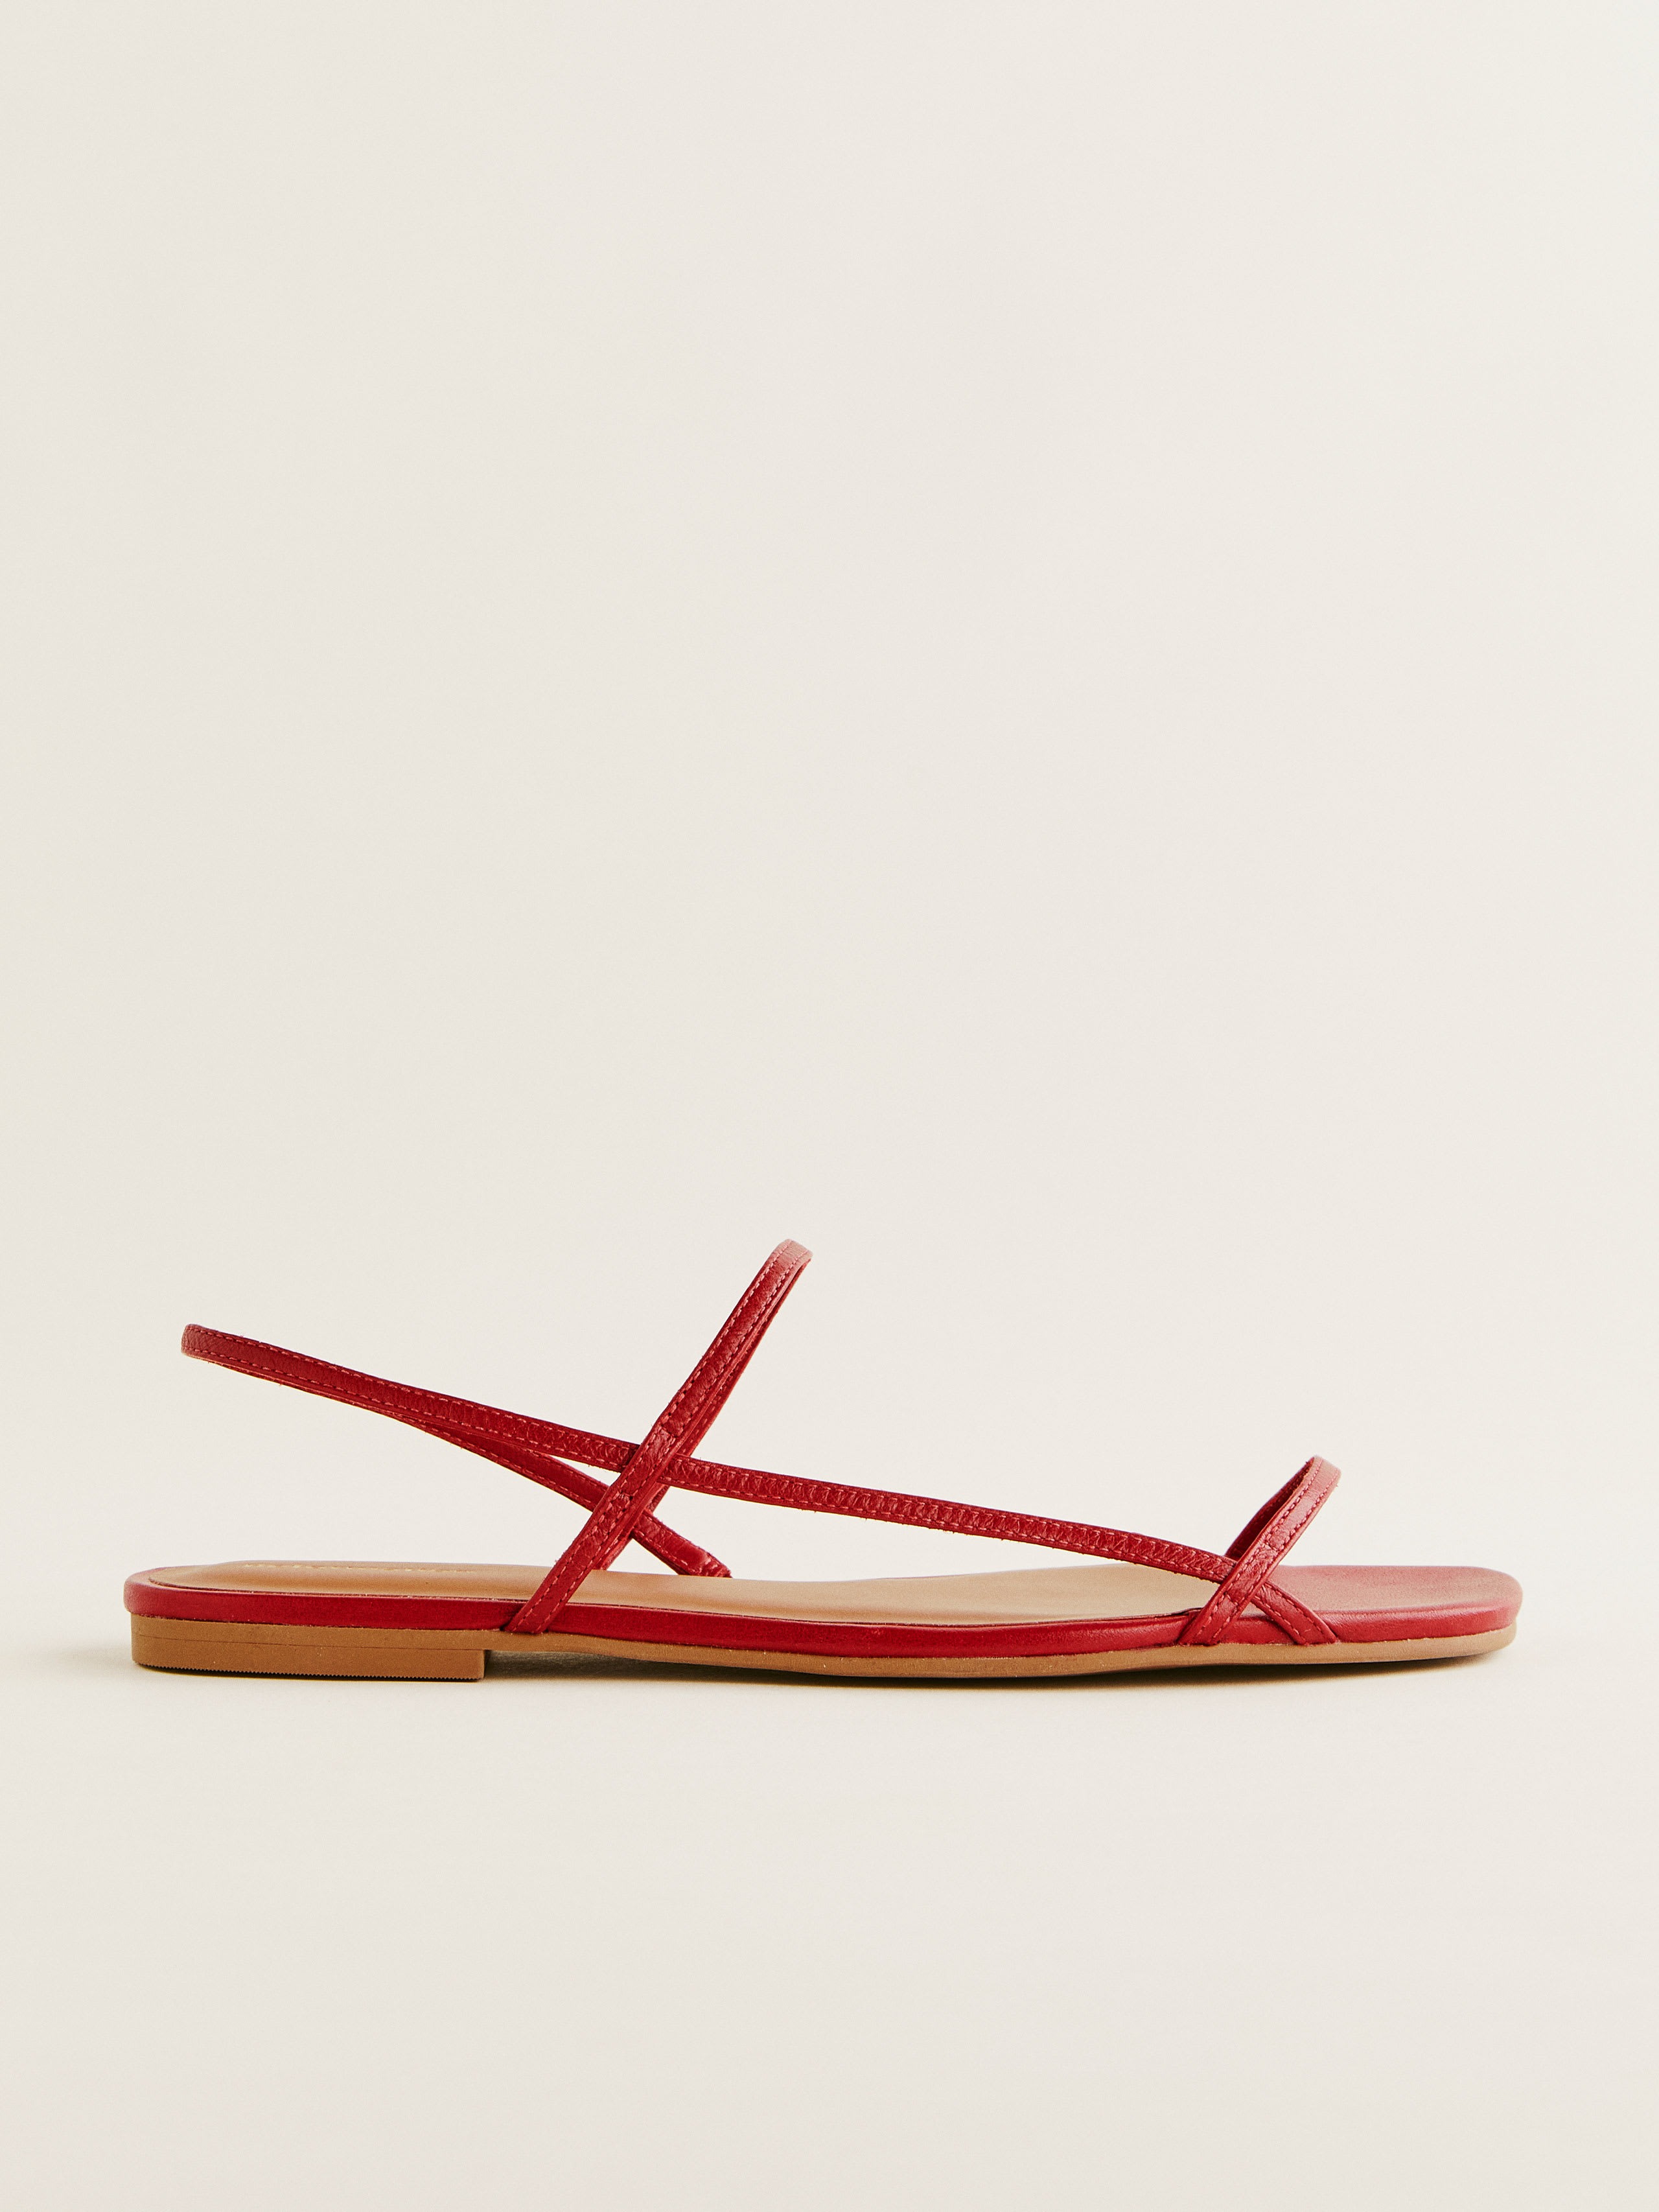 Reformation red sandals